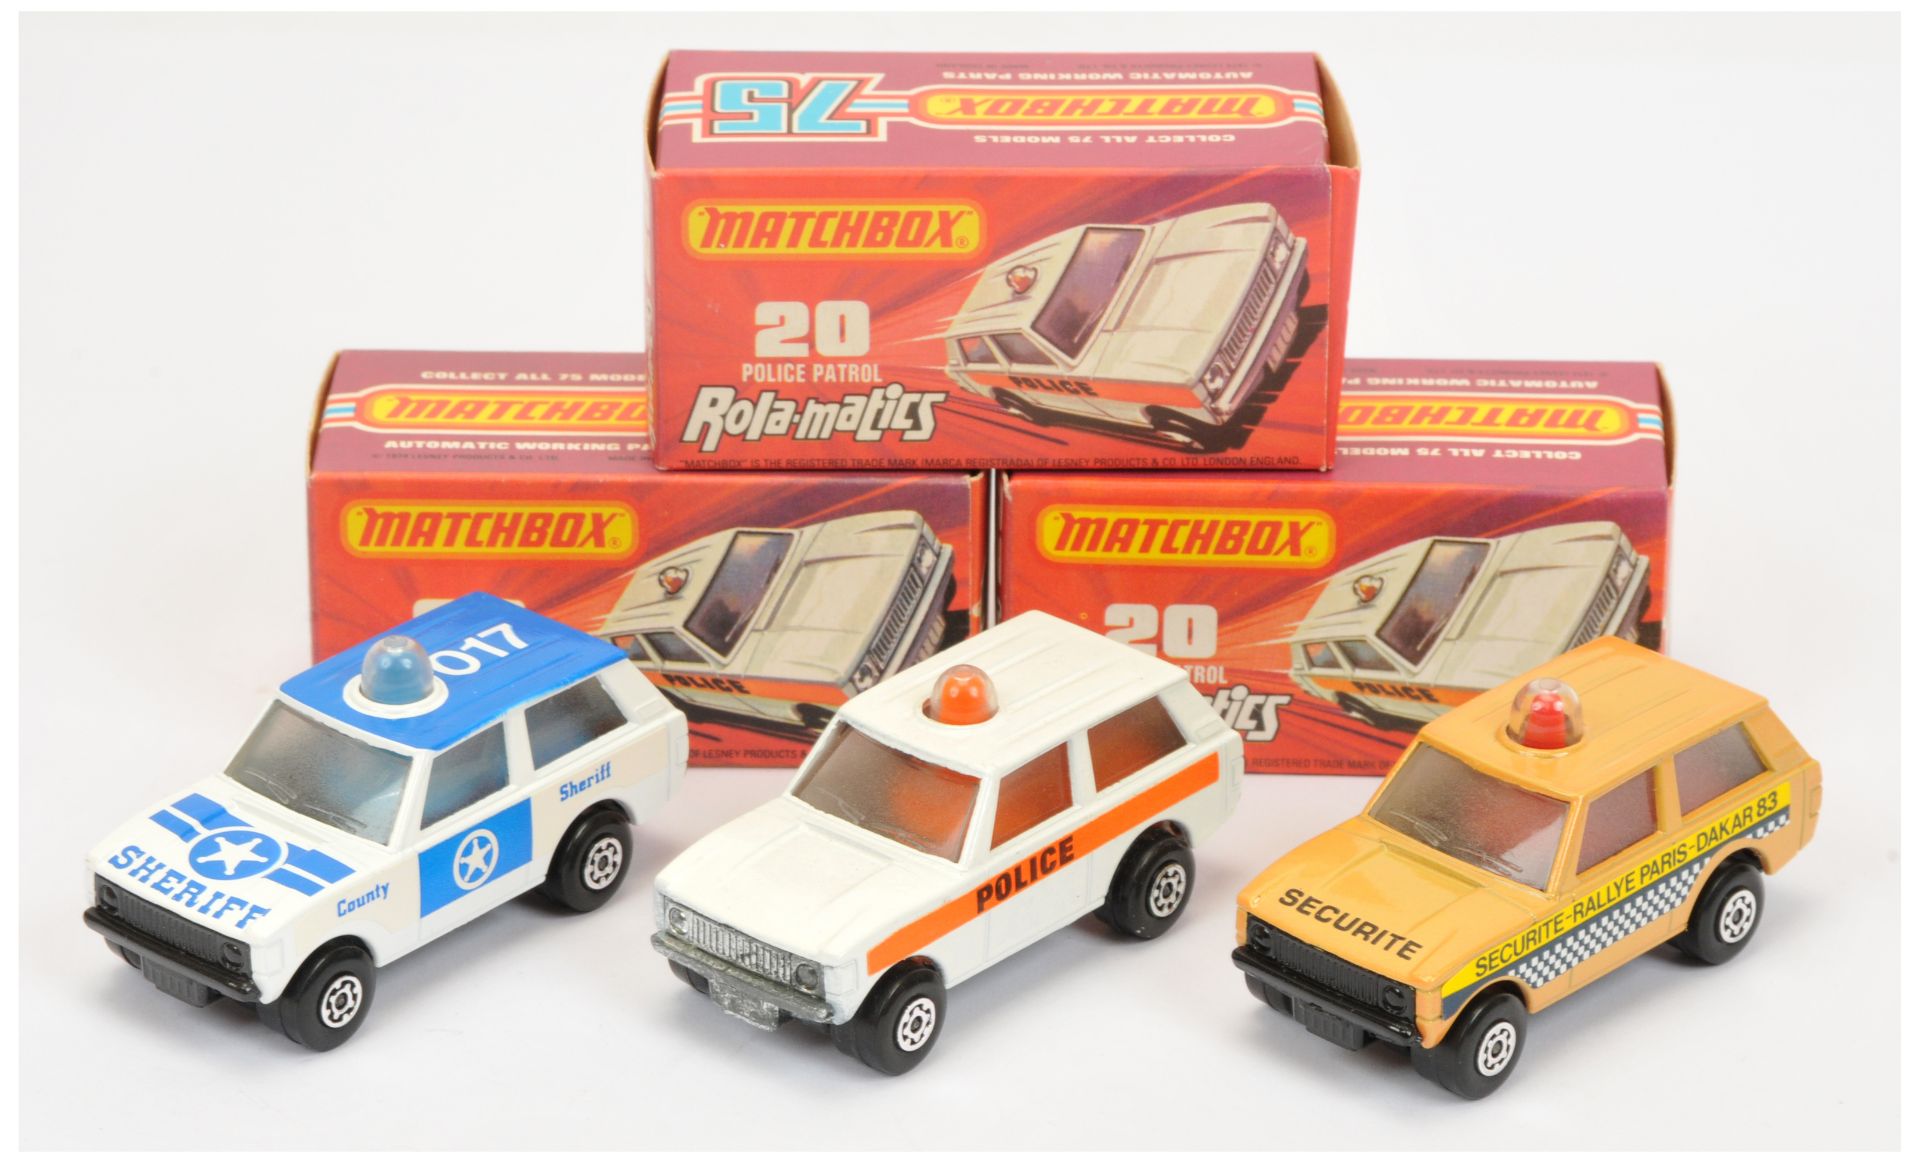 Matchbox Superfast 20b Range Rover Group Of 3 - (1) "Police" - White body orange side strip, inte...